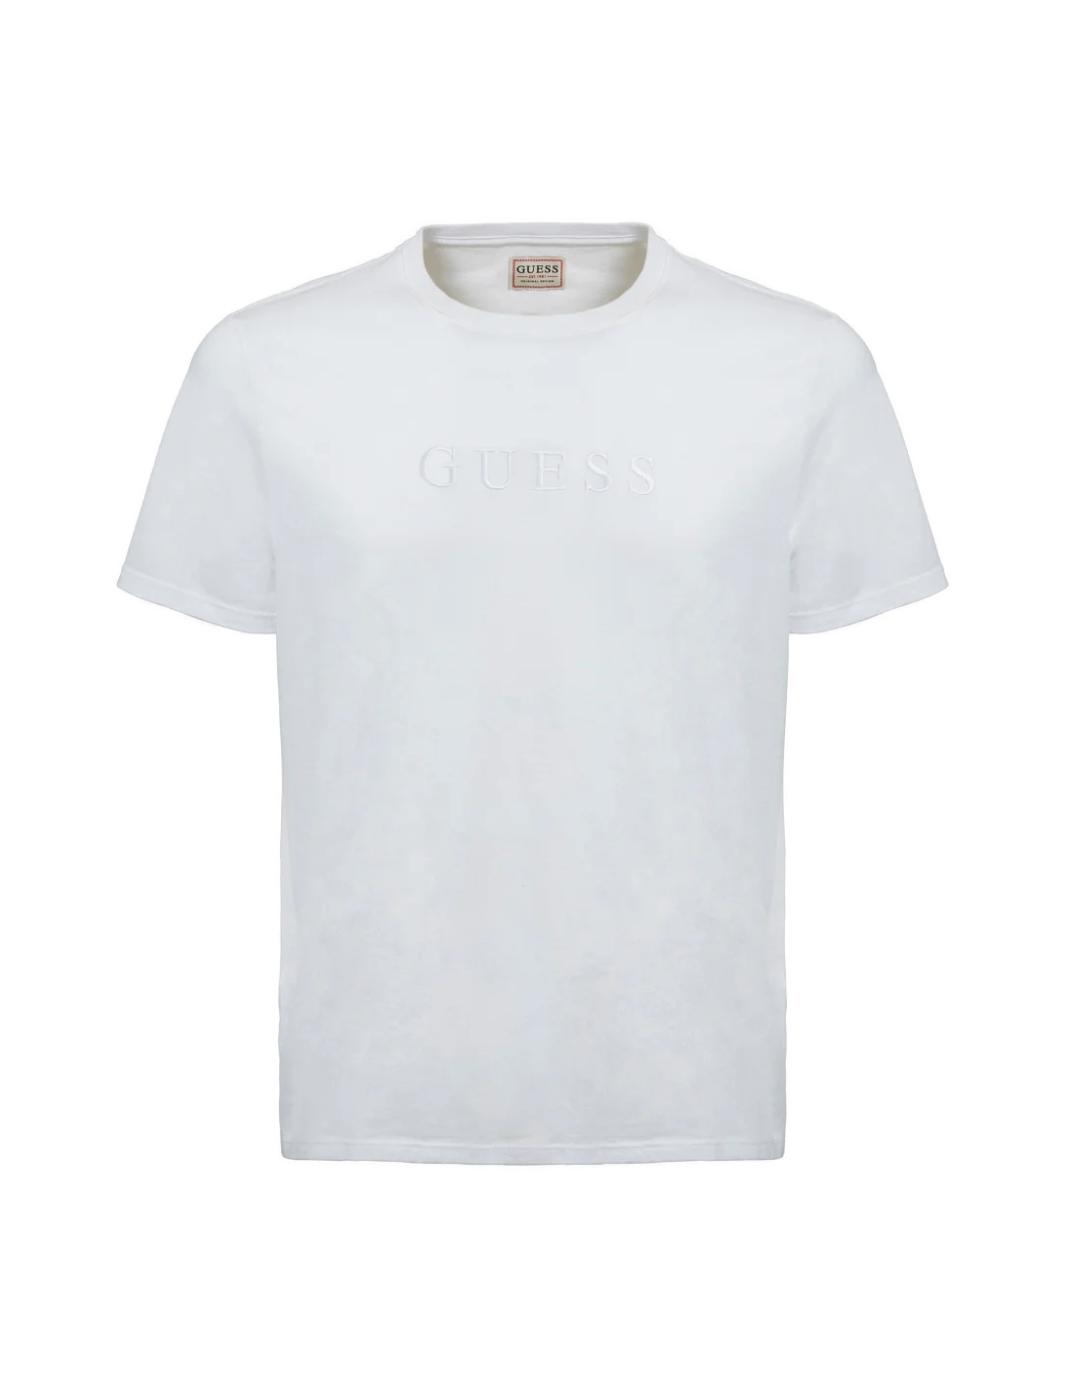 Camiseta Guess Pima blanca para hombre -a